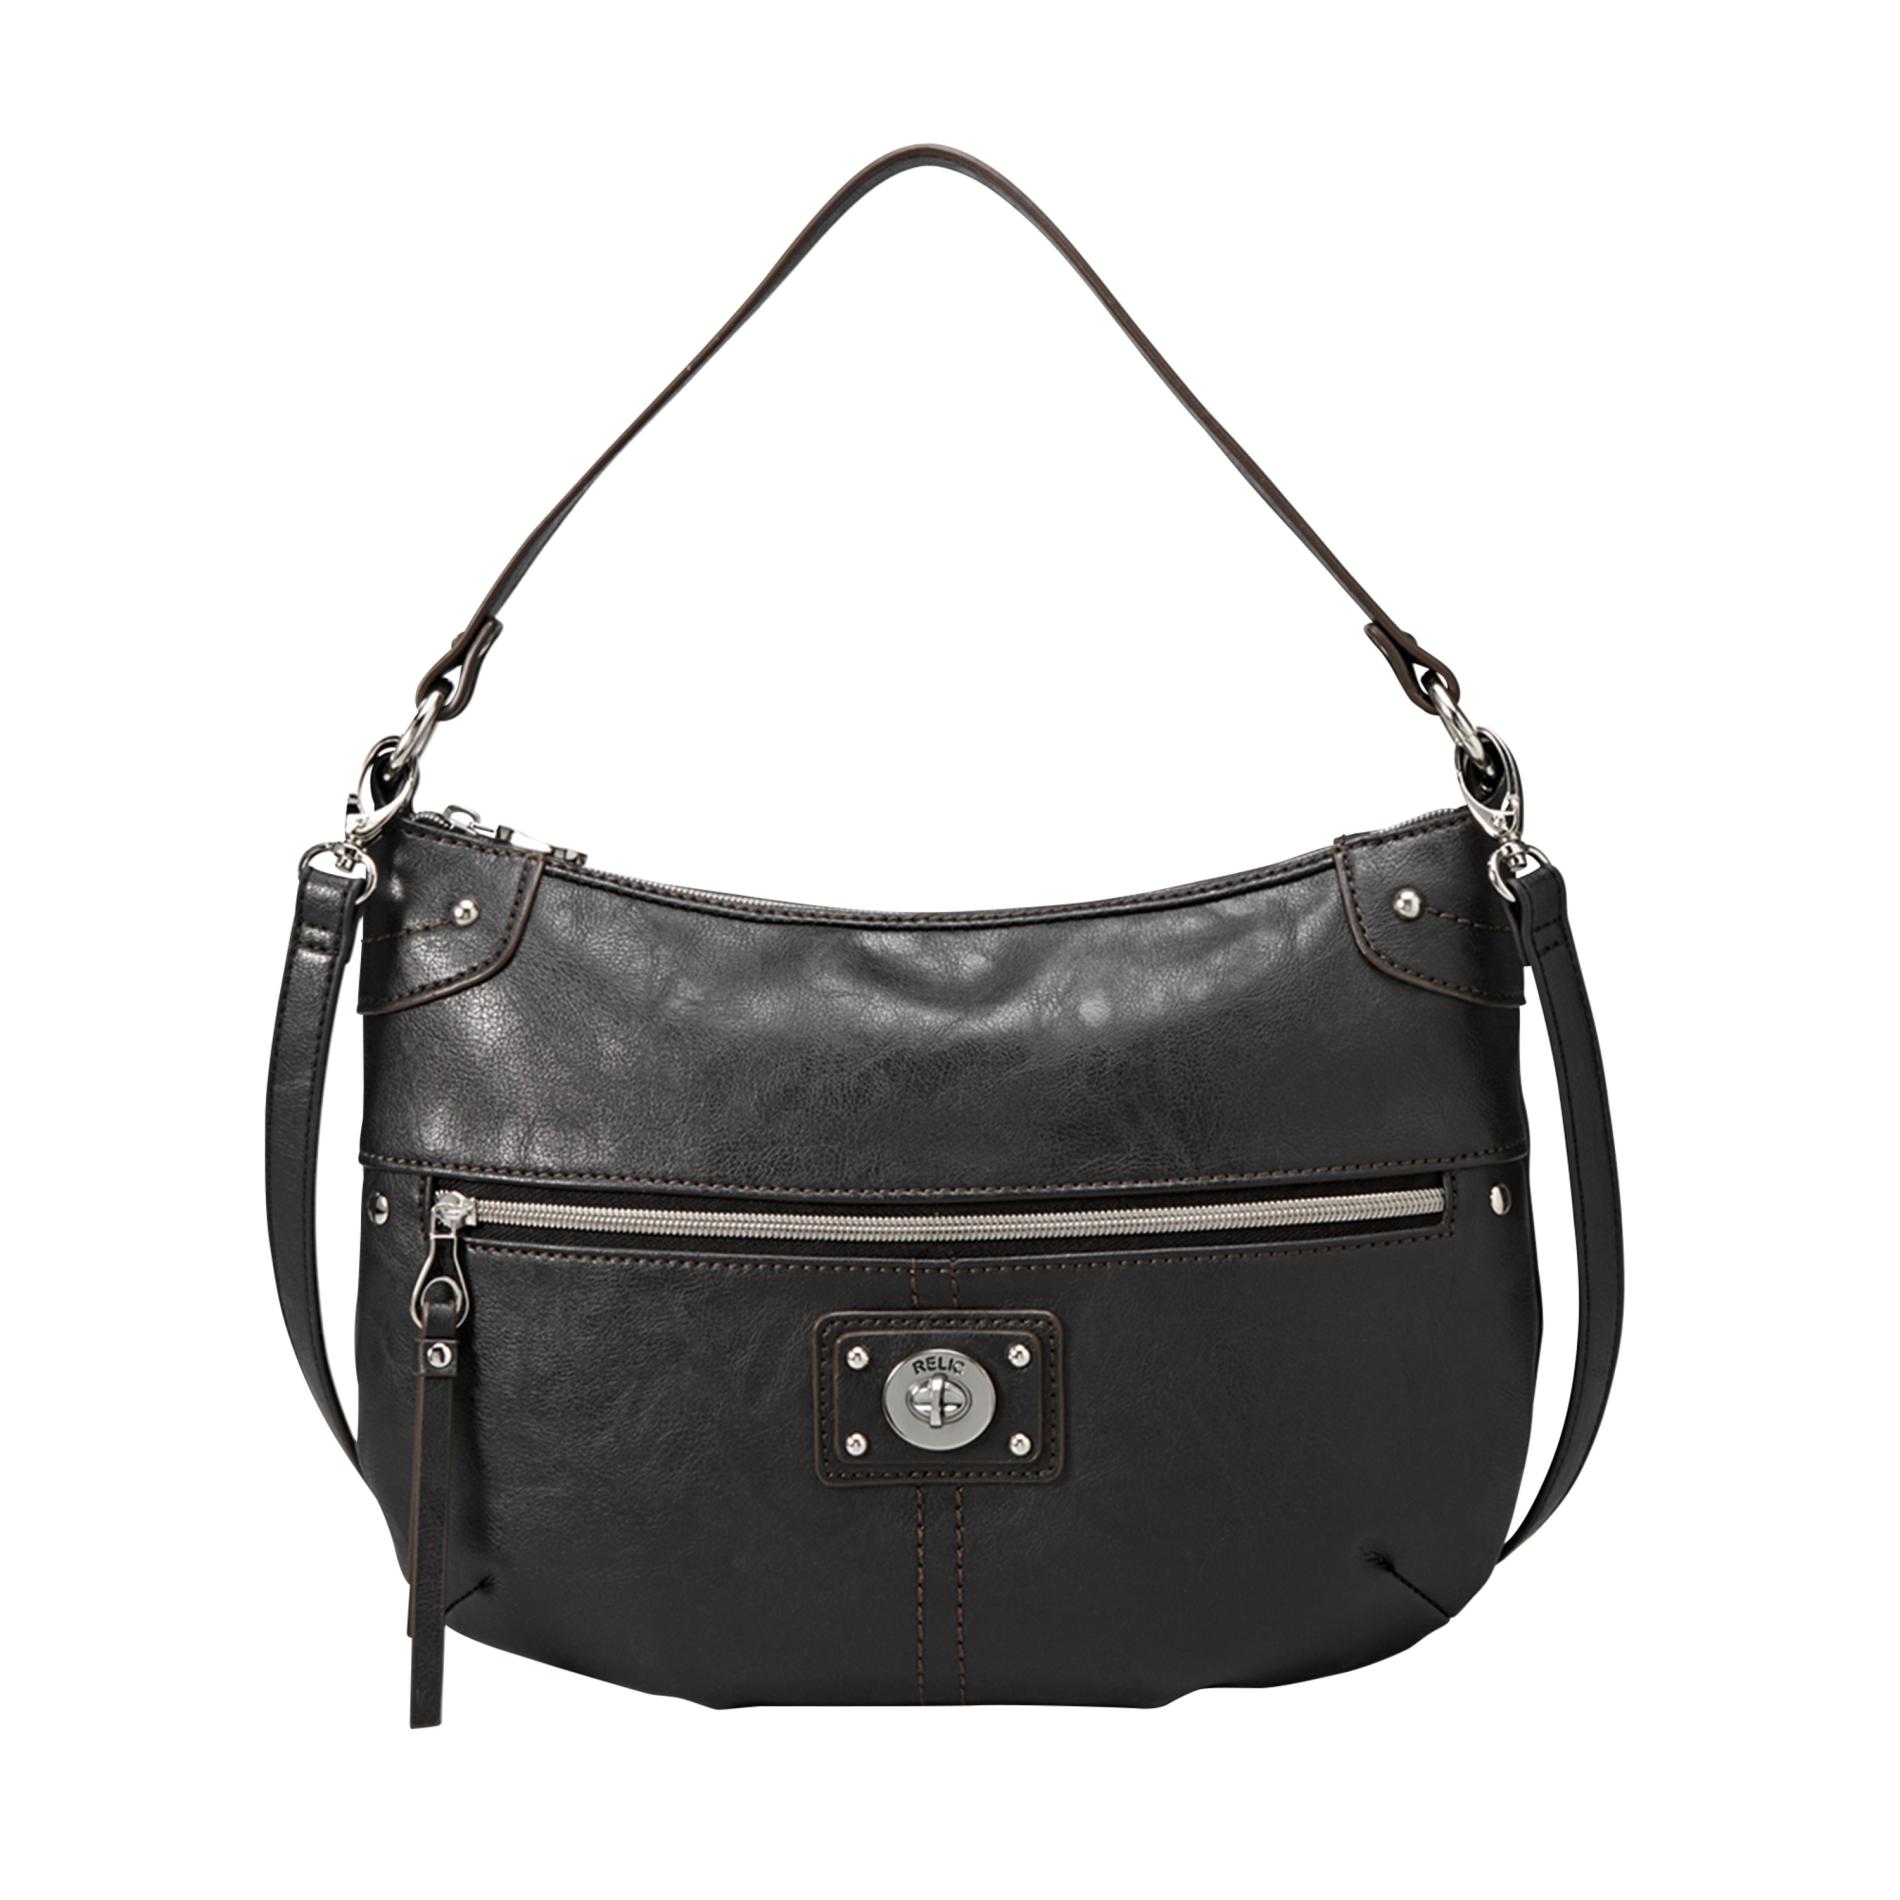 Relic Women's Faux Leather Satchel Handbag